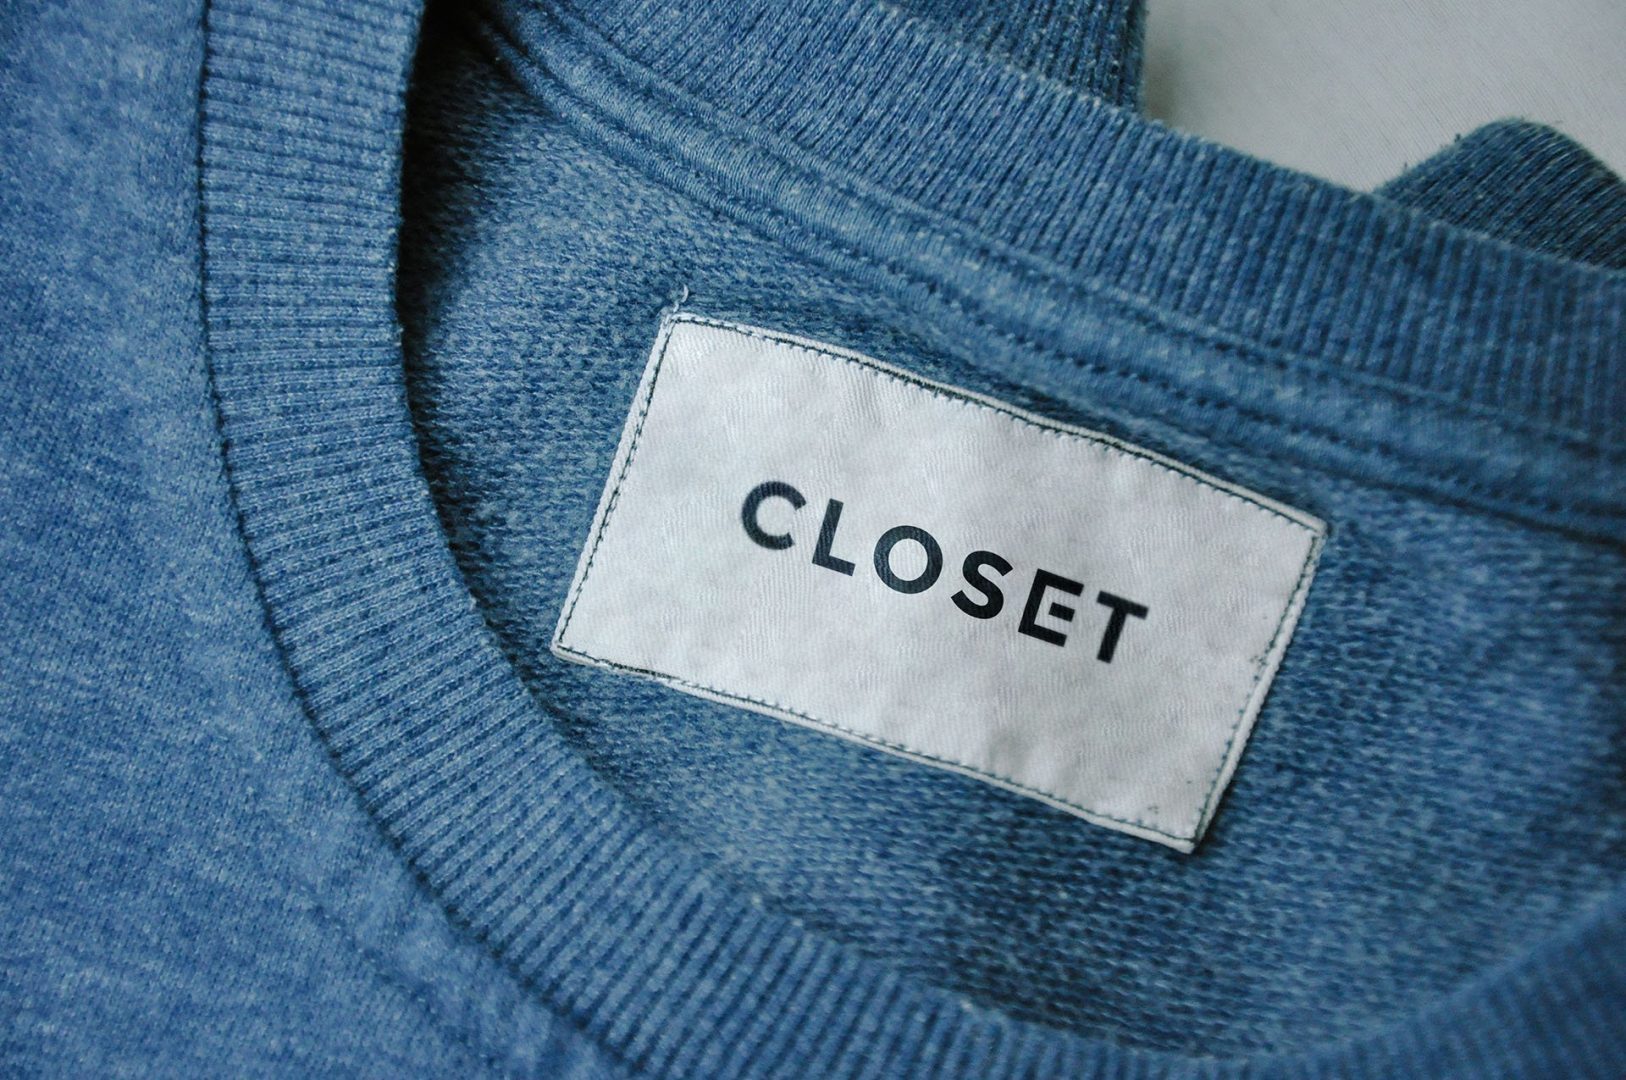 Closet Fashion Store Closet.pk